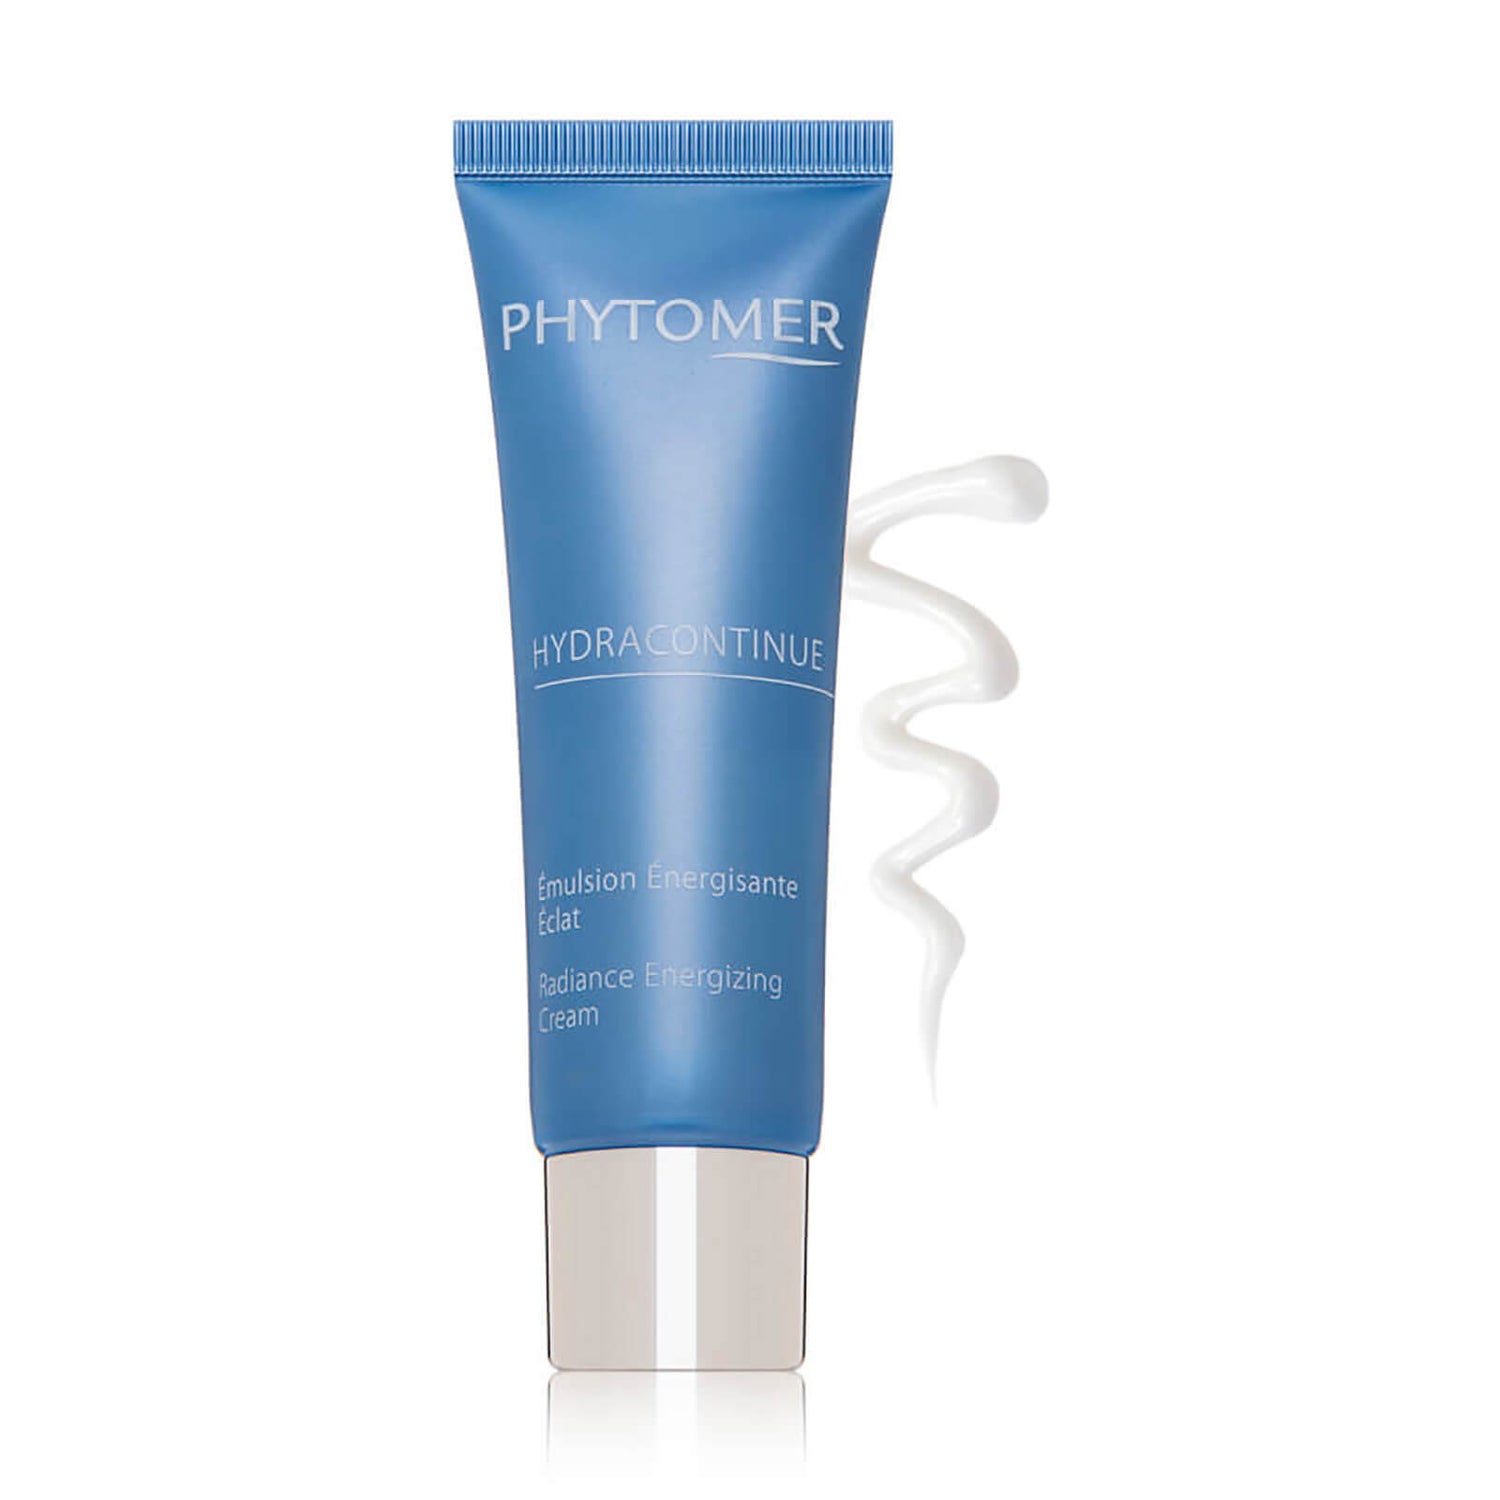 Phytomer HydraContinue Radiance Energizing Cream (1.6 fl. oz.)